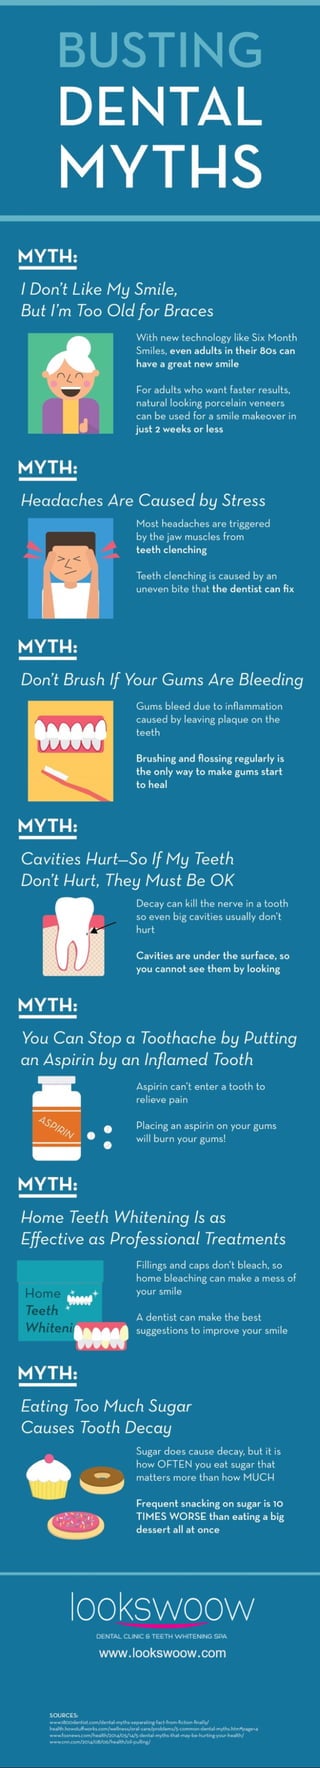 Busting Dental Myths